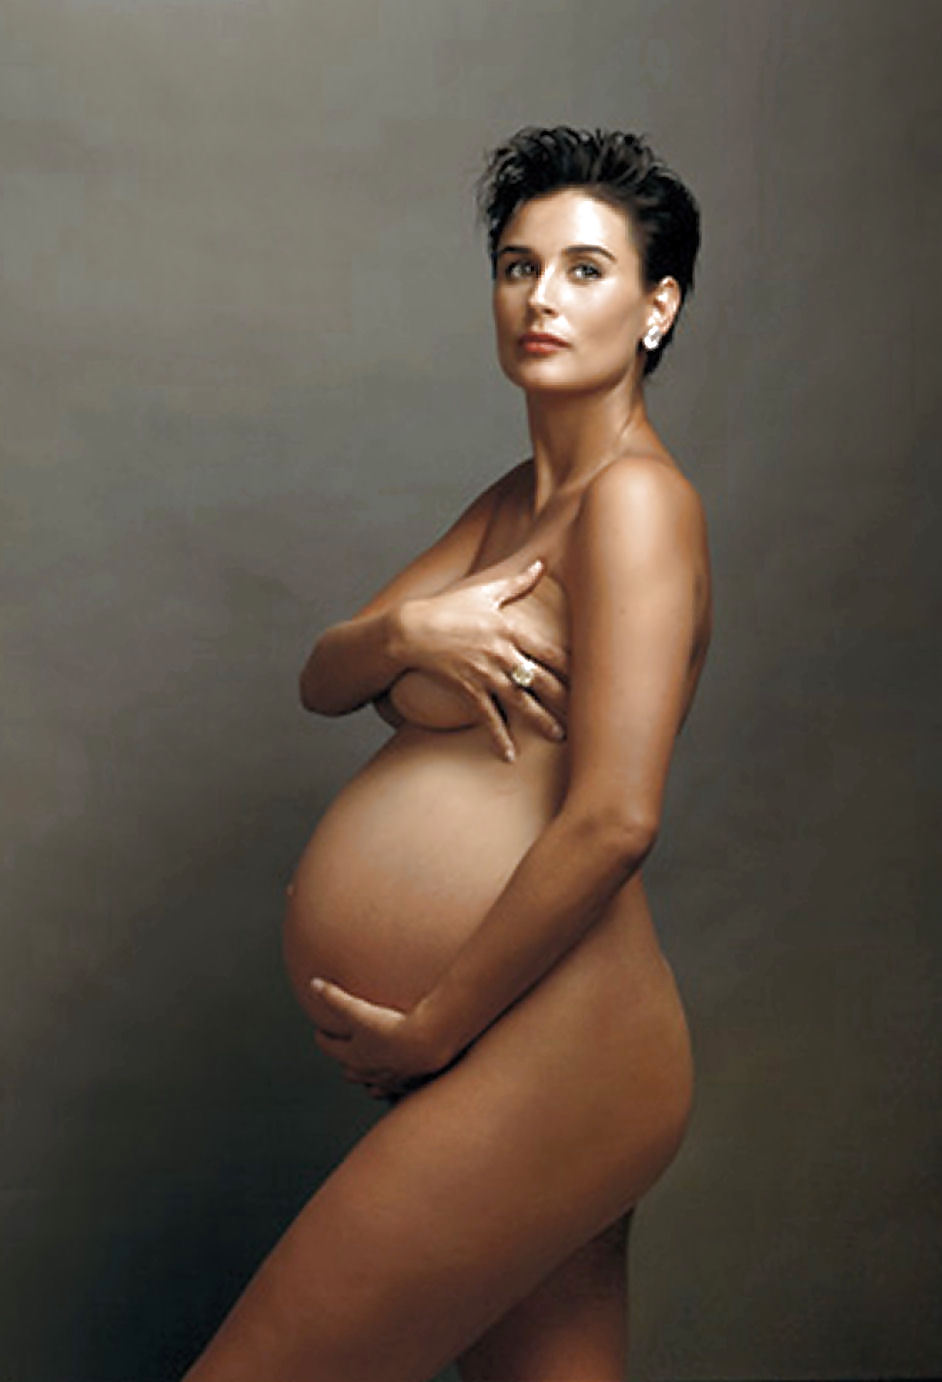 PREGNANT CELEBS - REAL PHOTOS - NO FAKES - londonlad #3541096